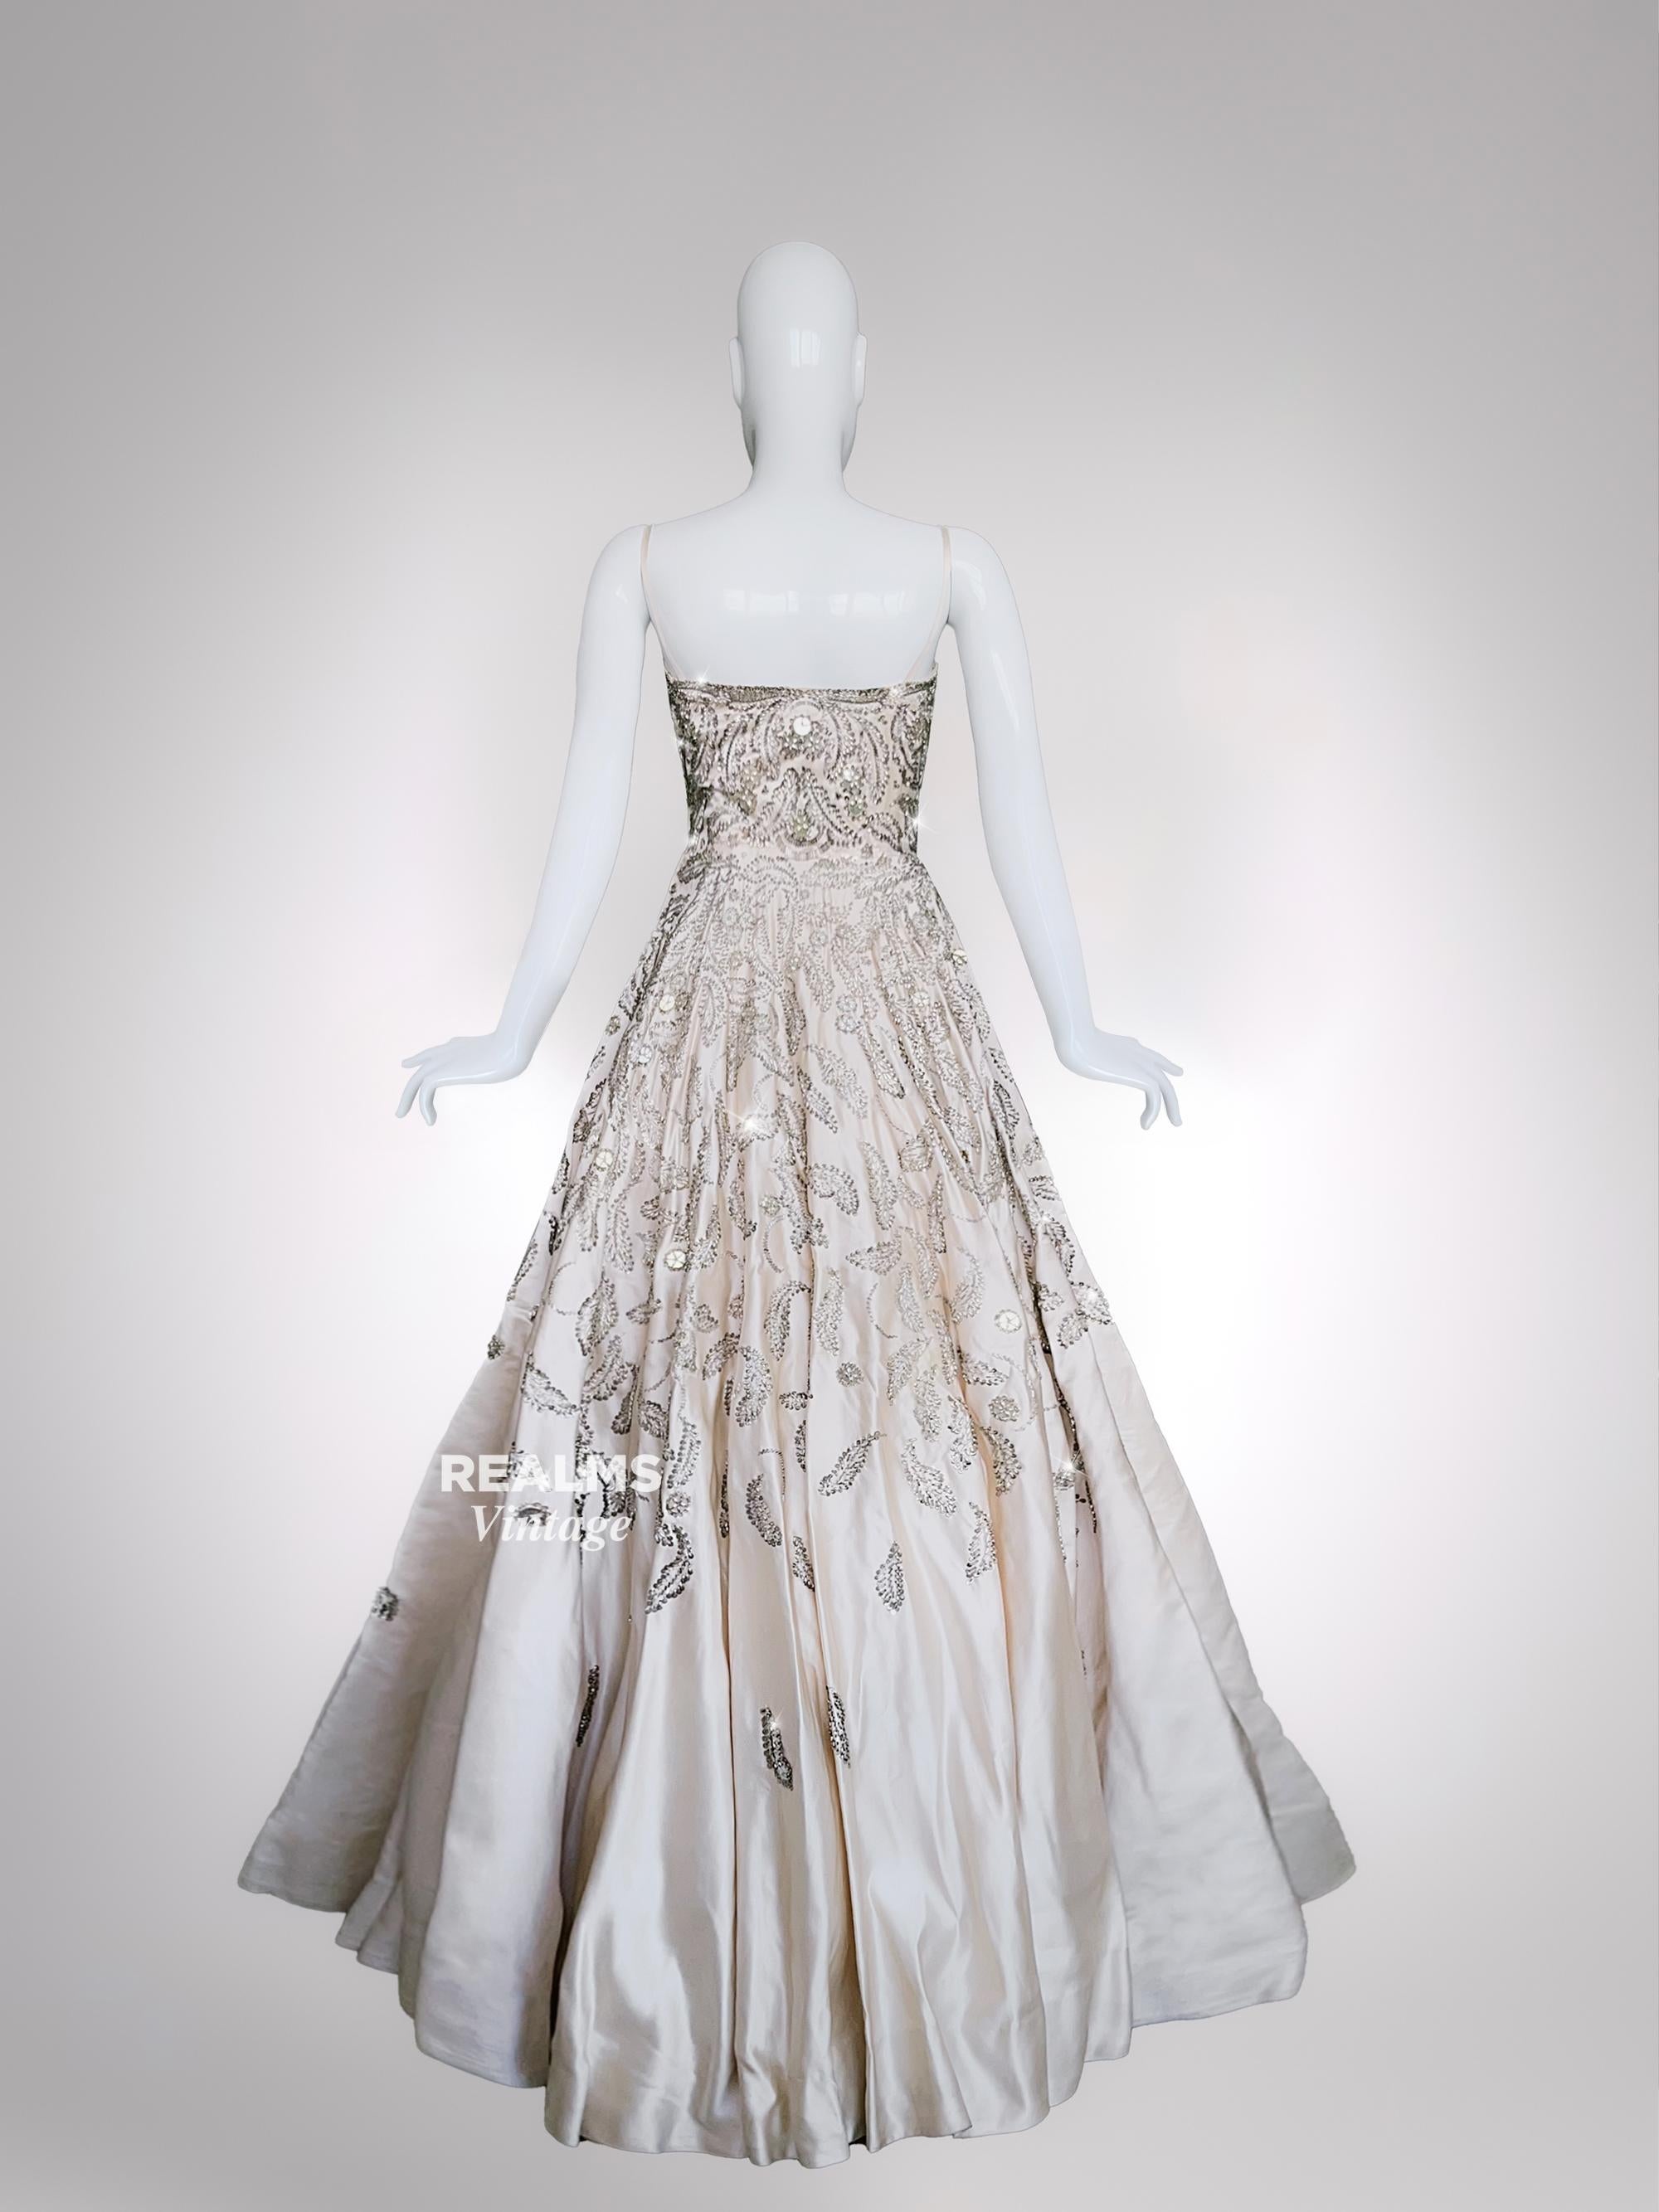 Women's Pierre Balmain Couture Ballgown  1955 Iconic Dress For Sale